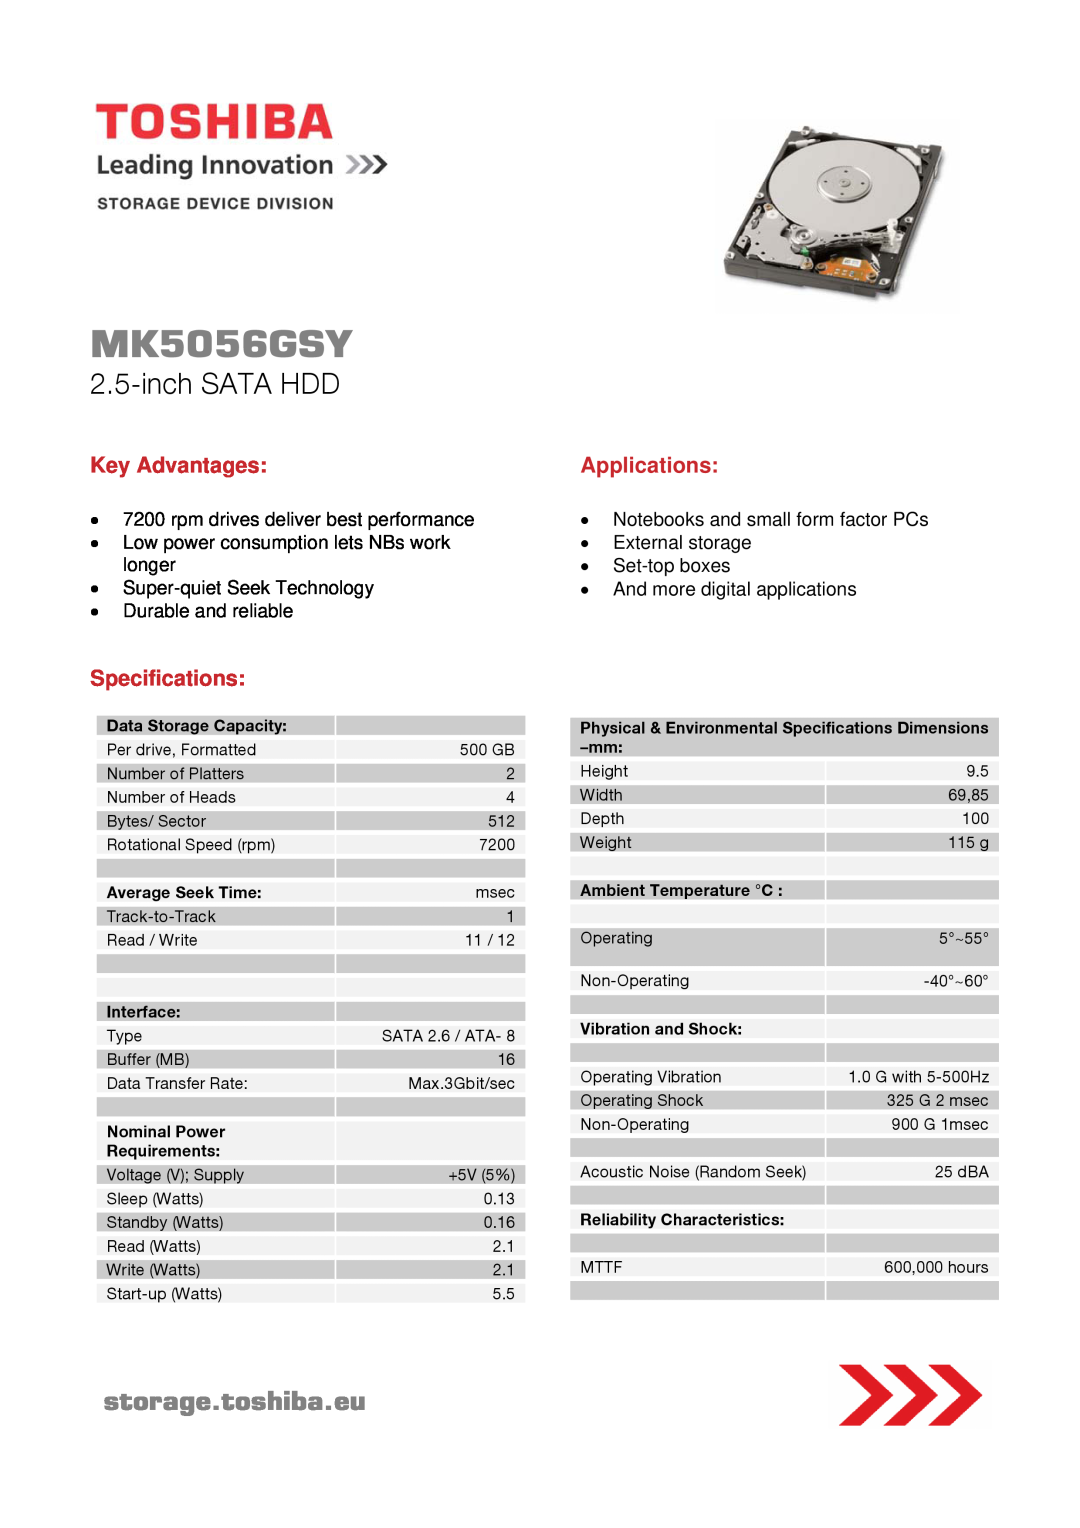 Toshiba MK5056GSY specifications inch SATA HDD, storage.toshiba.eu, Key Advantages, Applications, Specifications, longer 